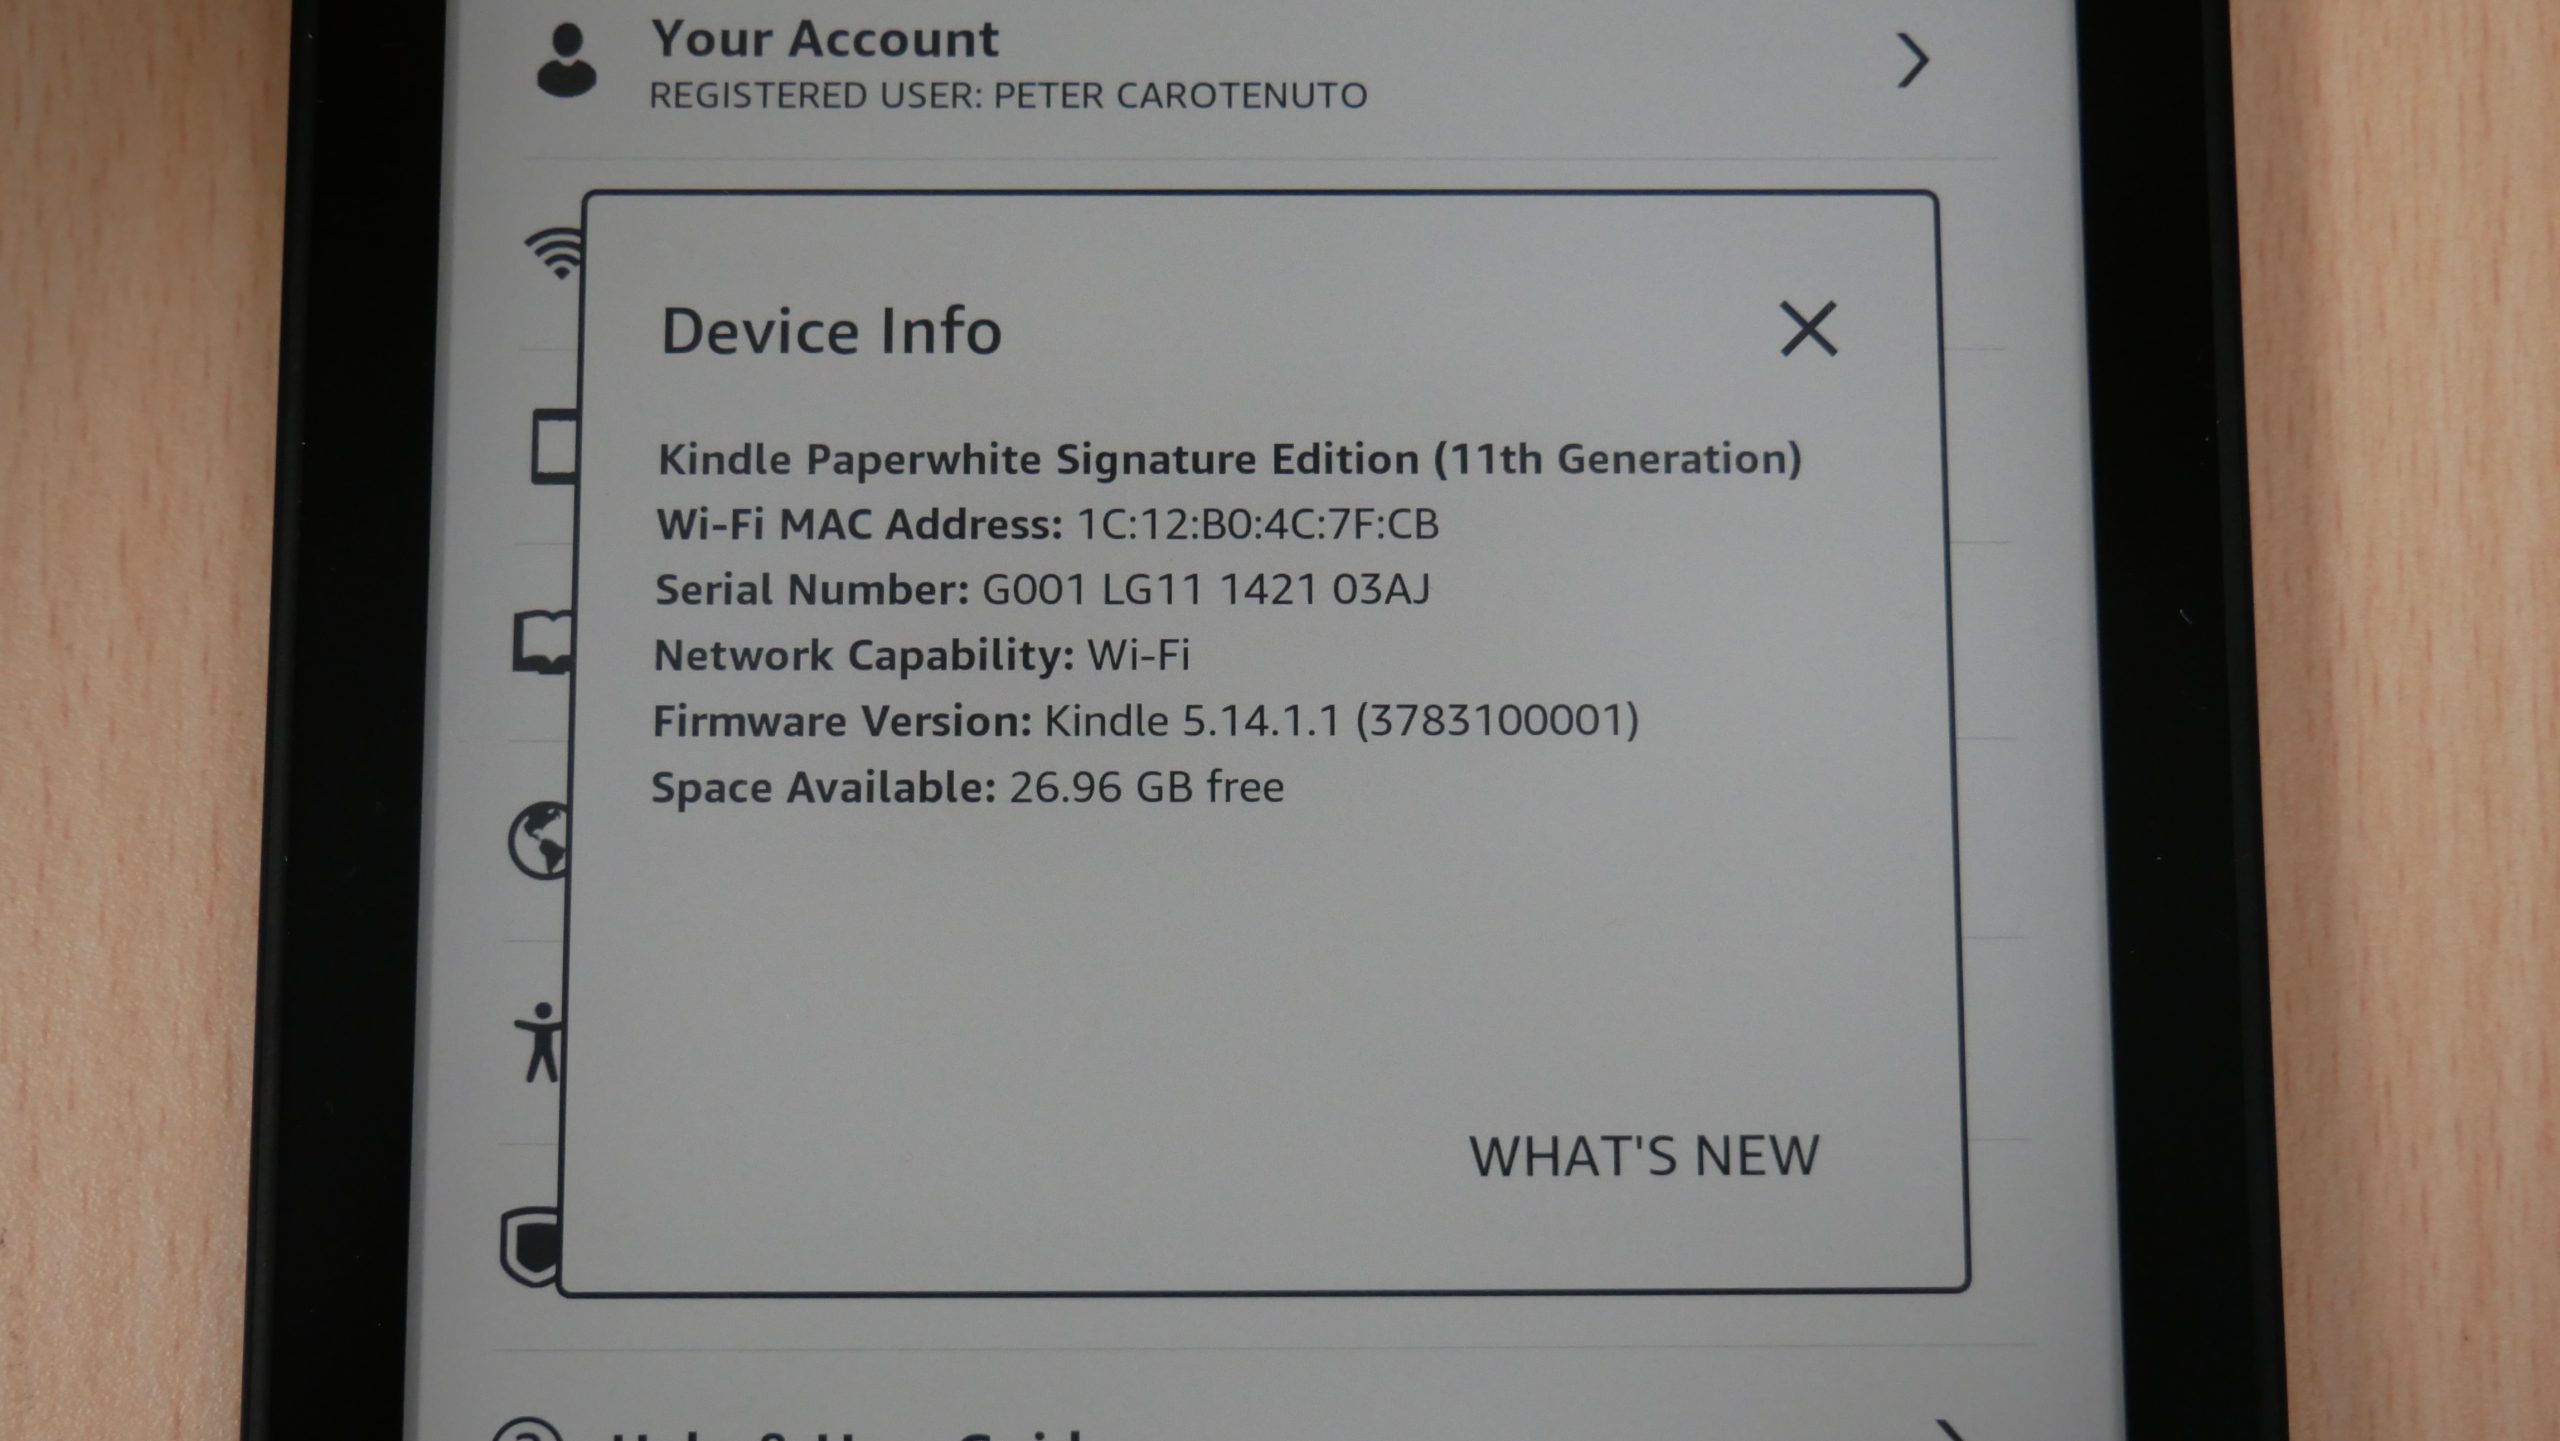 Kindle Paperwhite vs Signature Edition